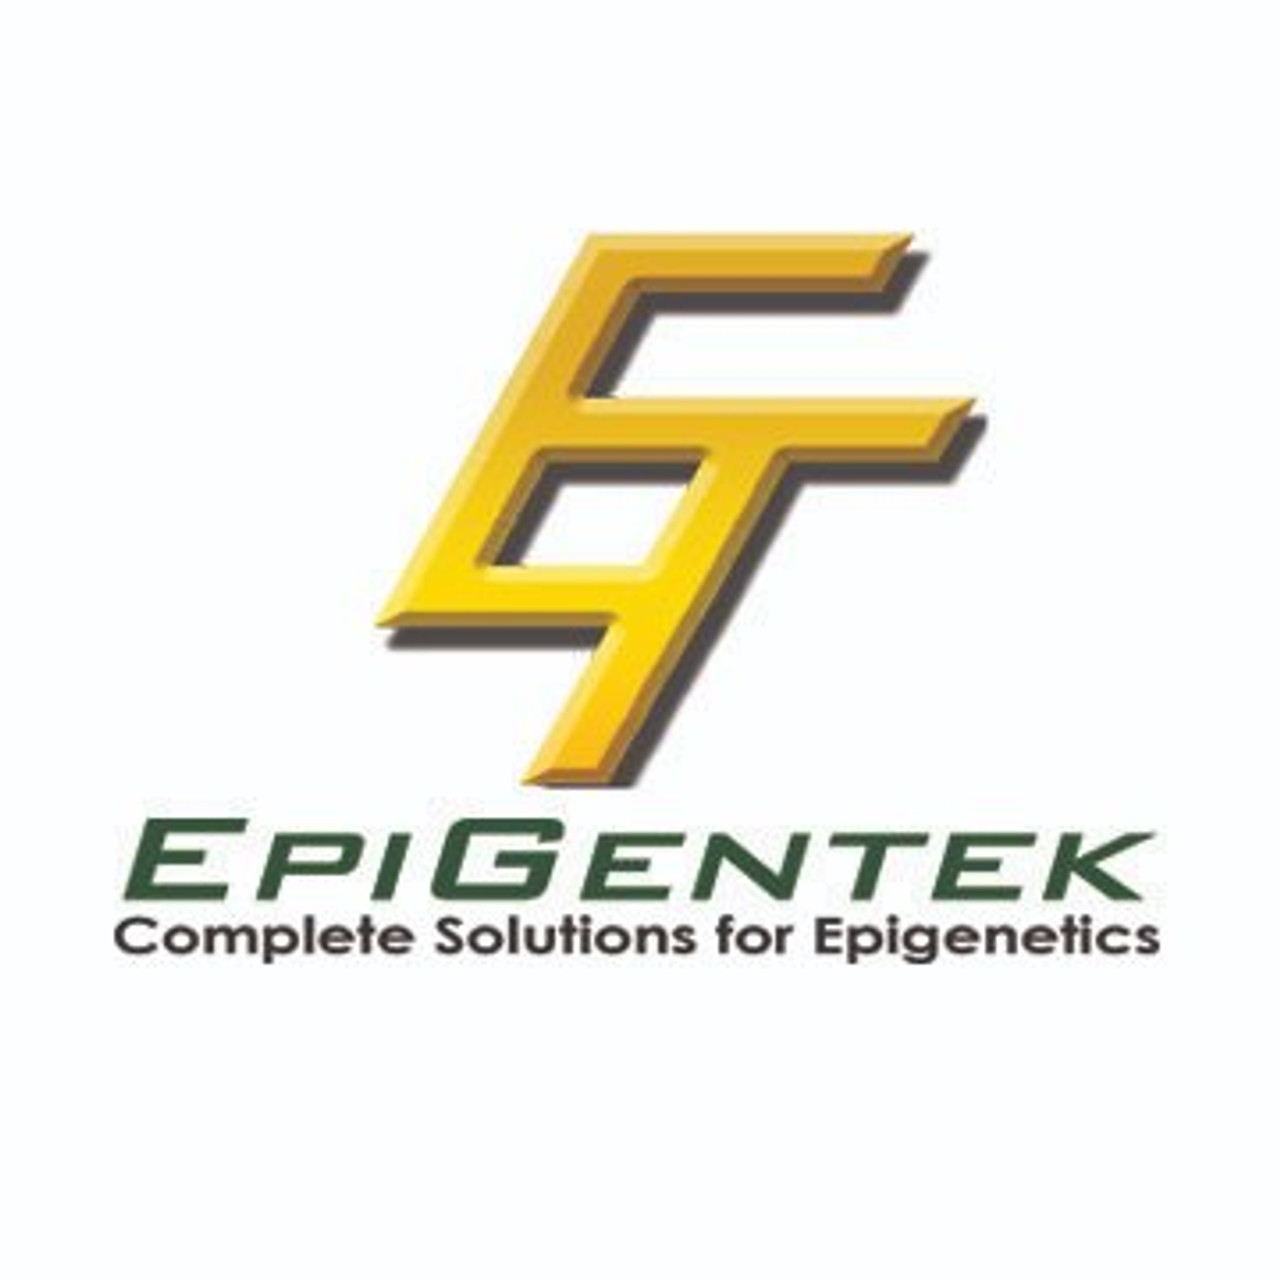 QuantiSir Specific Gene Knockdown Quantification Kit For Epigenetic Regulators - HDAC3